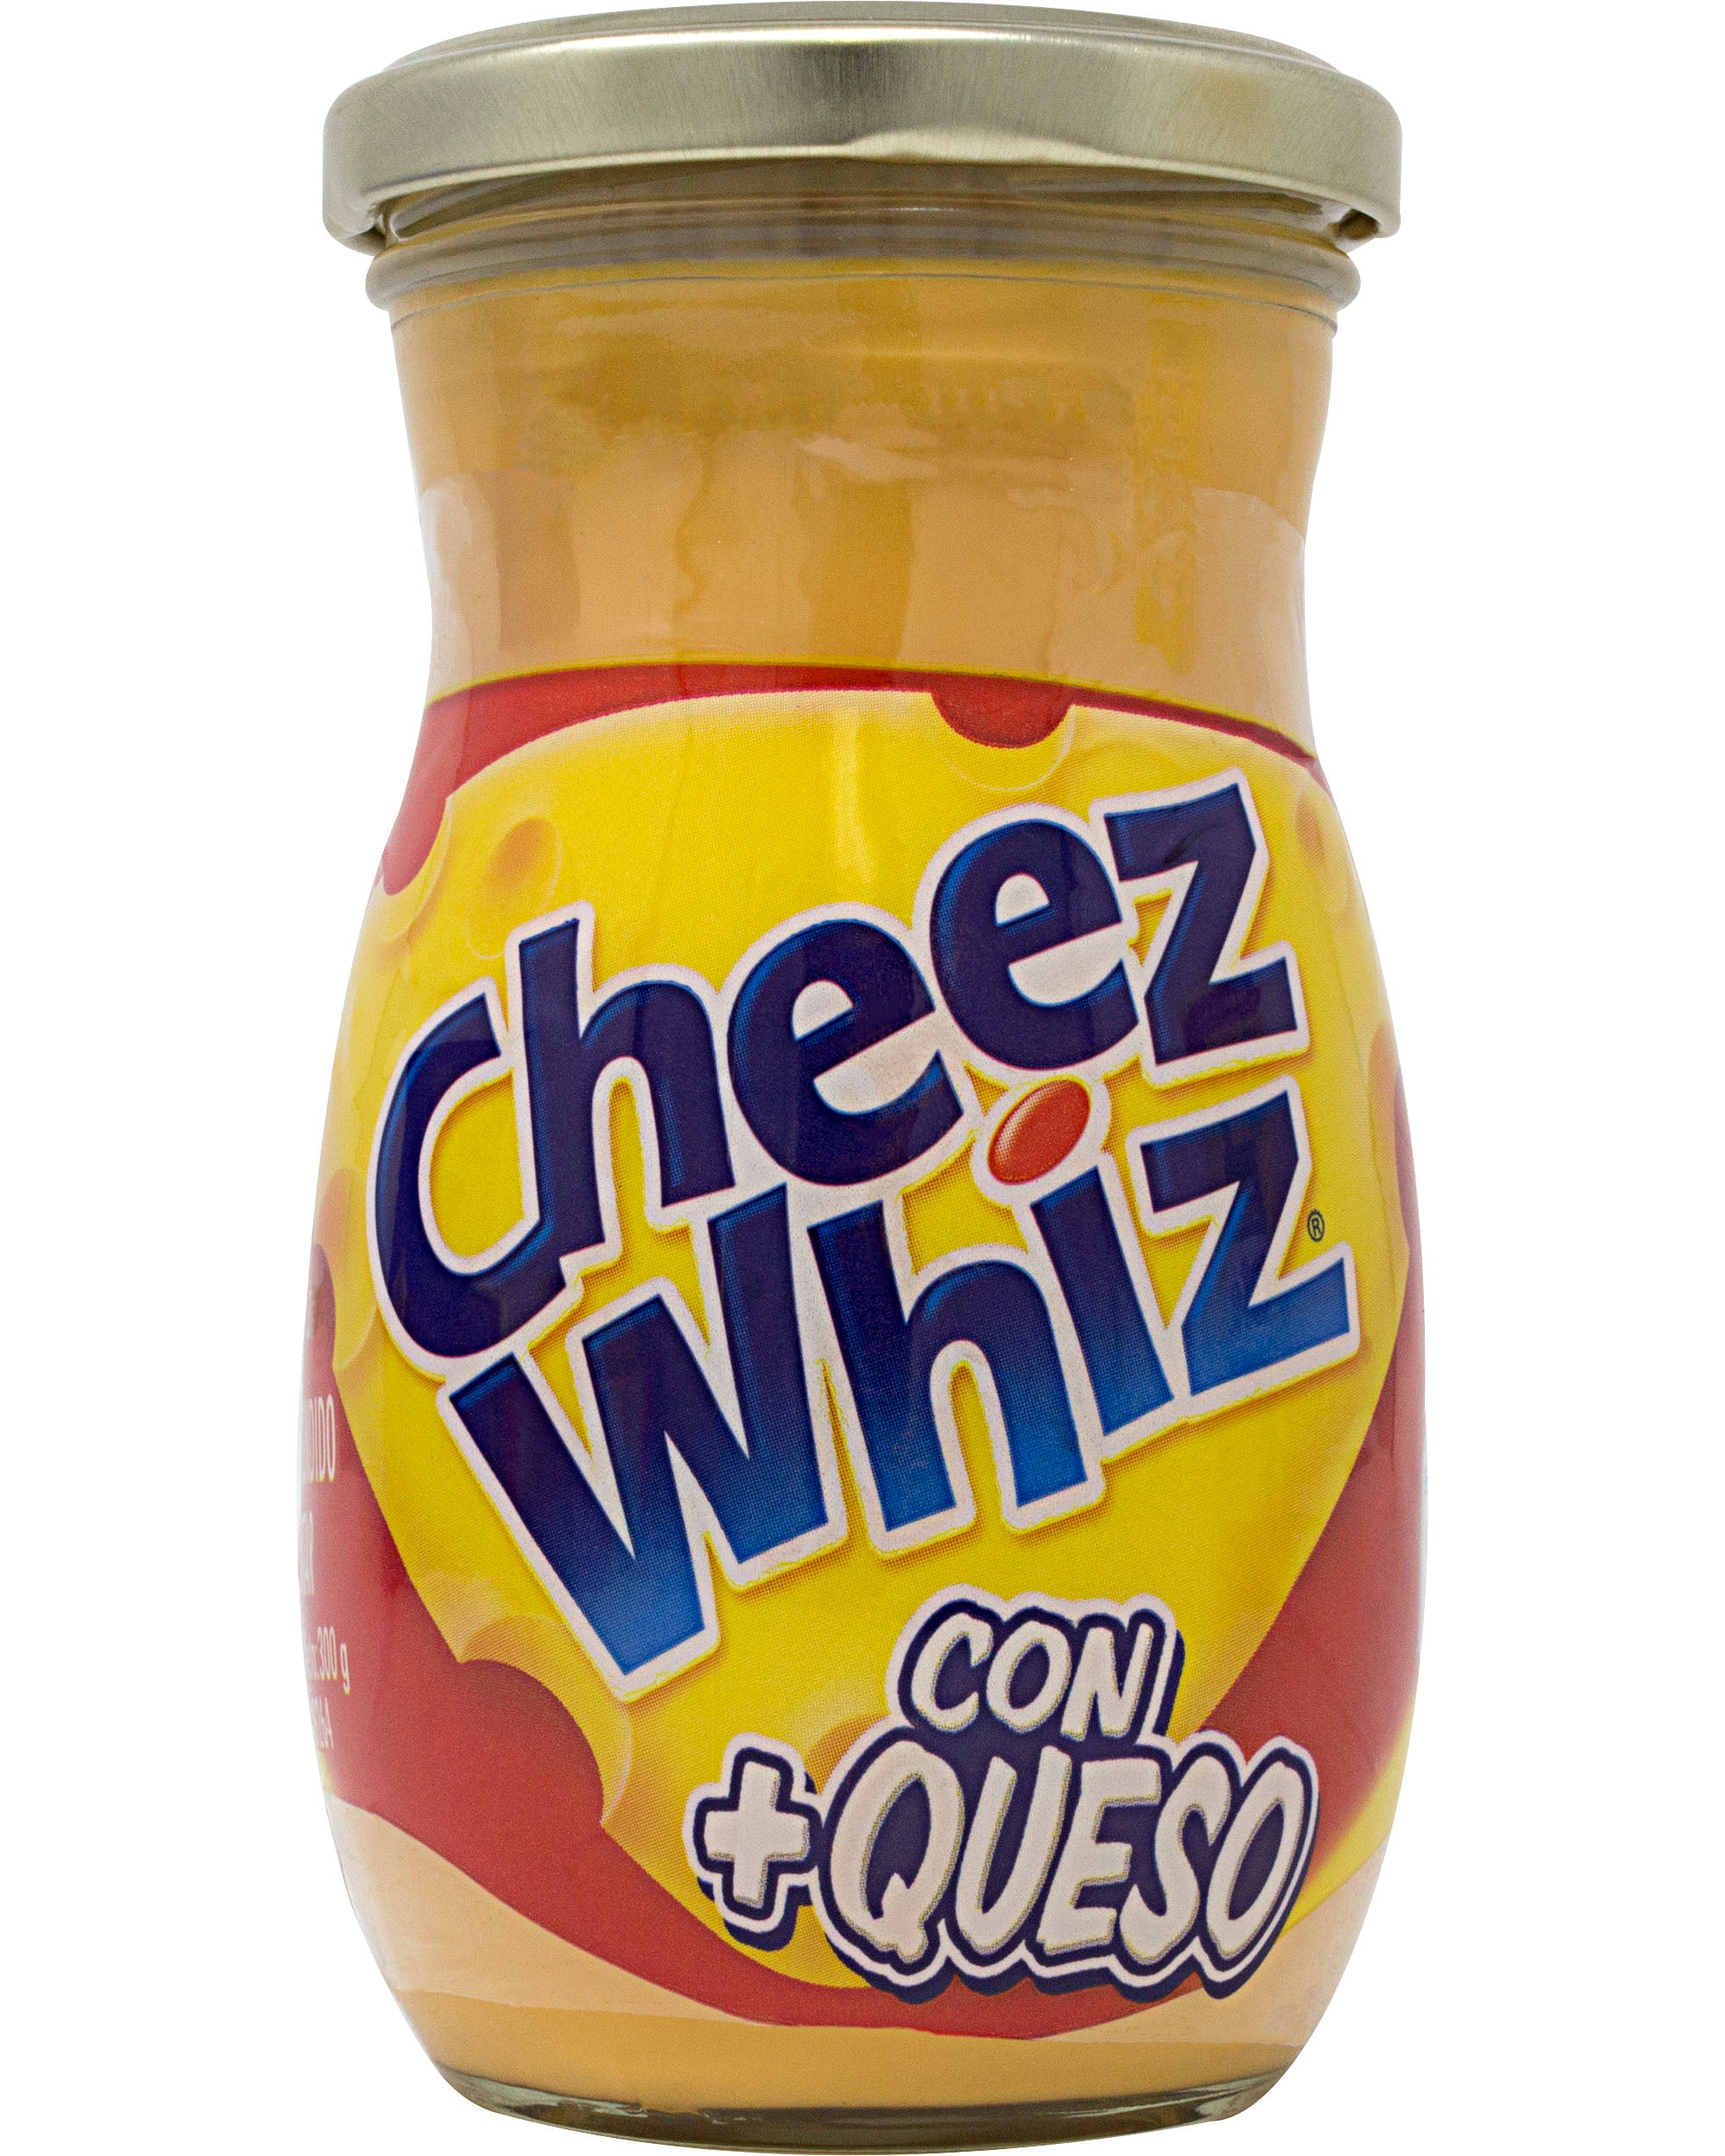 cheez whiz product label